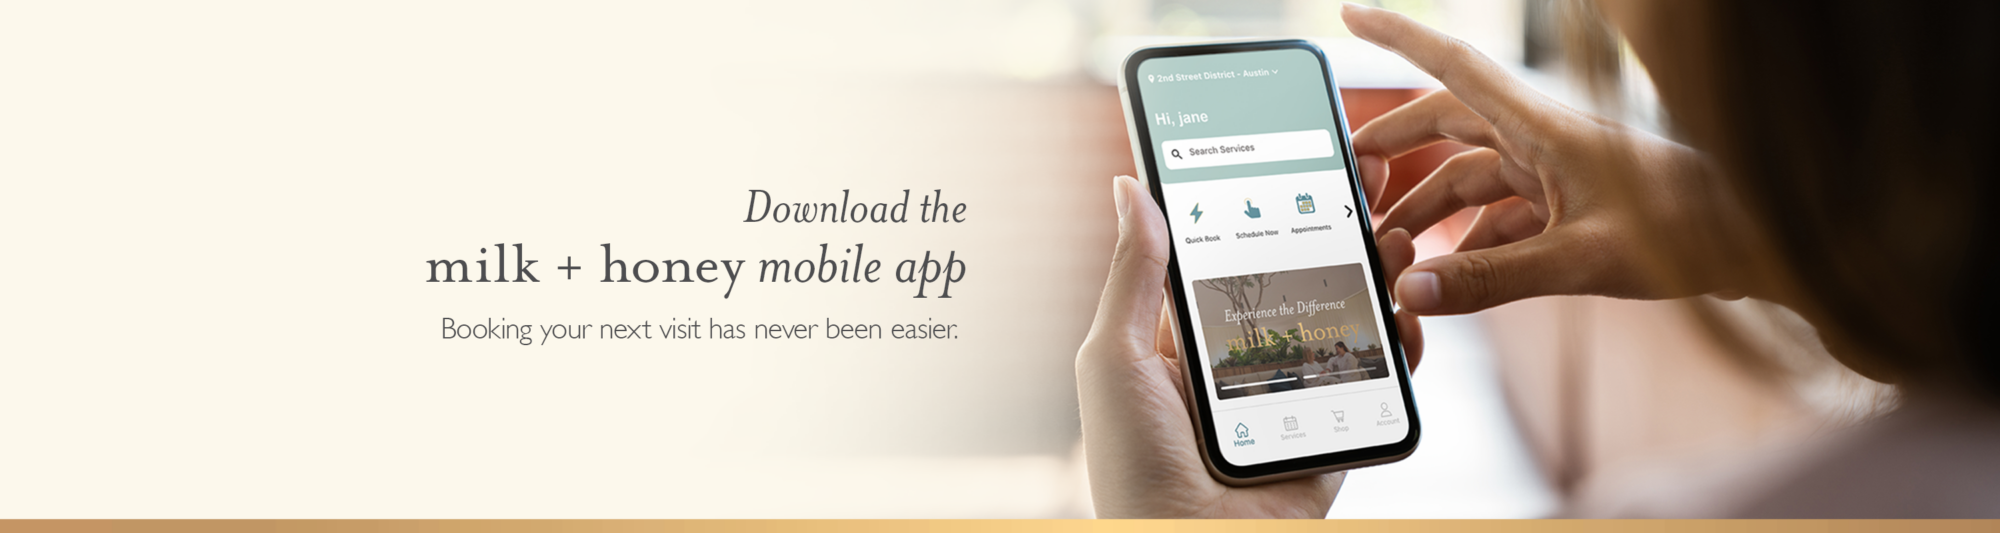 Download the milk + honey mobile app. Booking your next visit has never been easier.